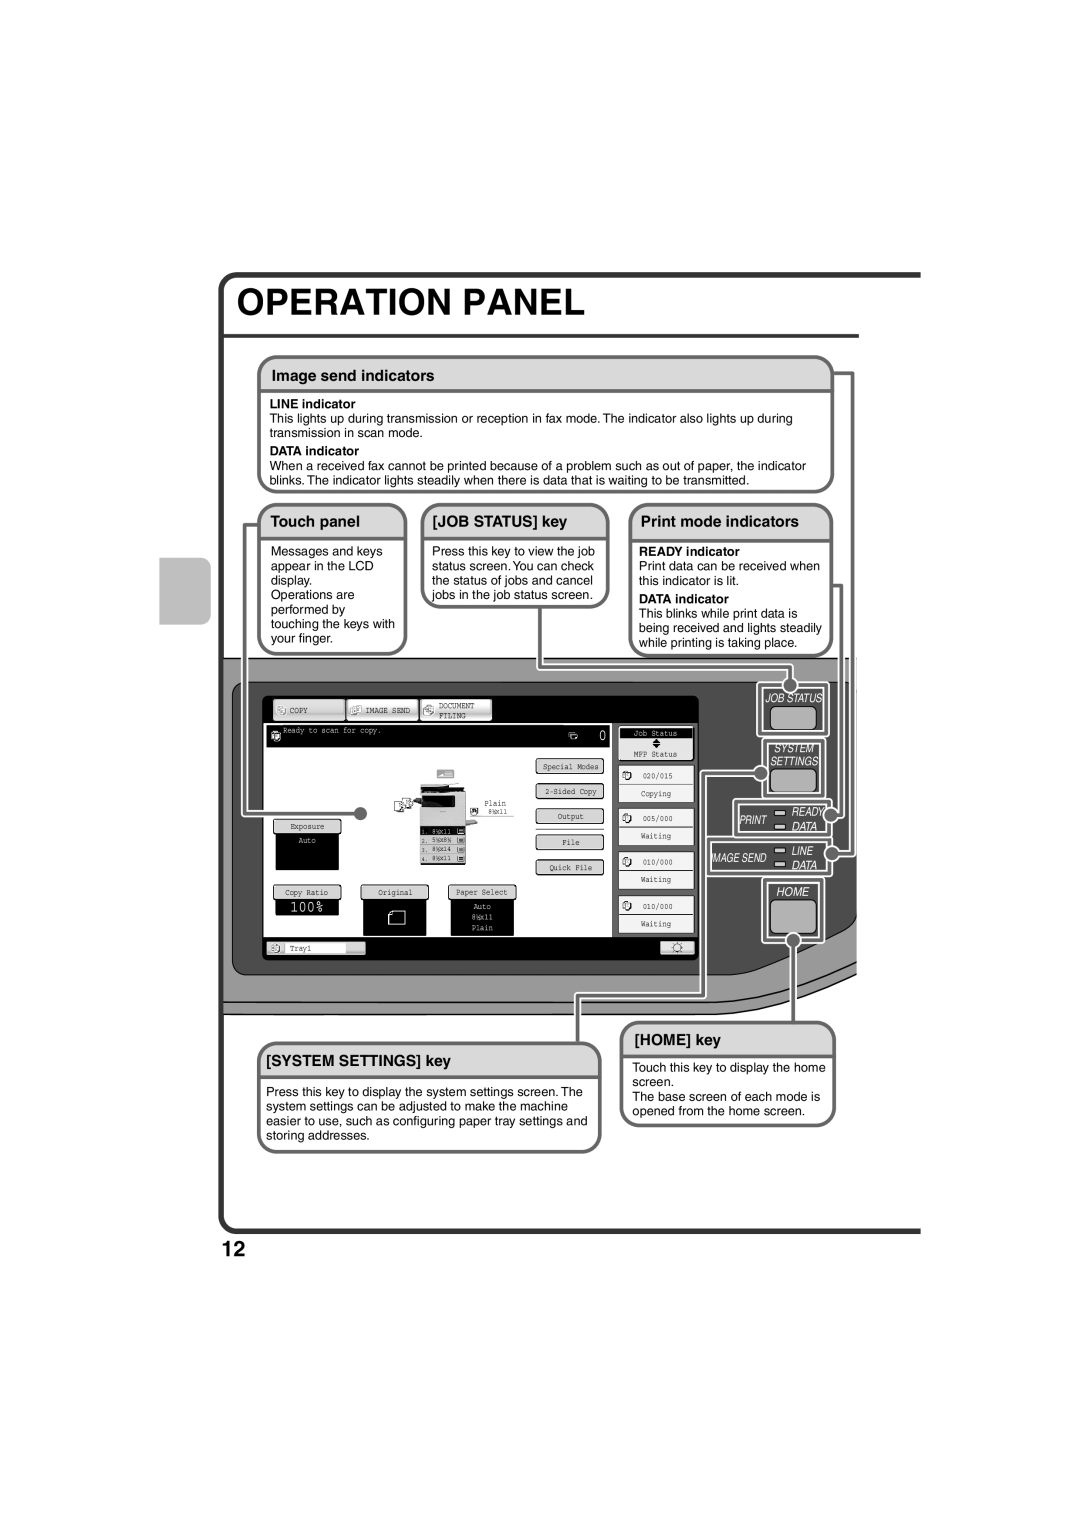 Sharp MX-B401 Operation Panel, 100%, Image send indicators, Touch panel, JOB STATUS key, Print mode indicators, HOME key 